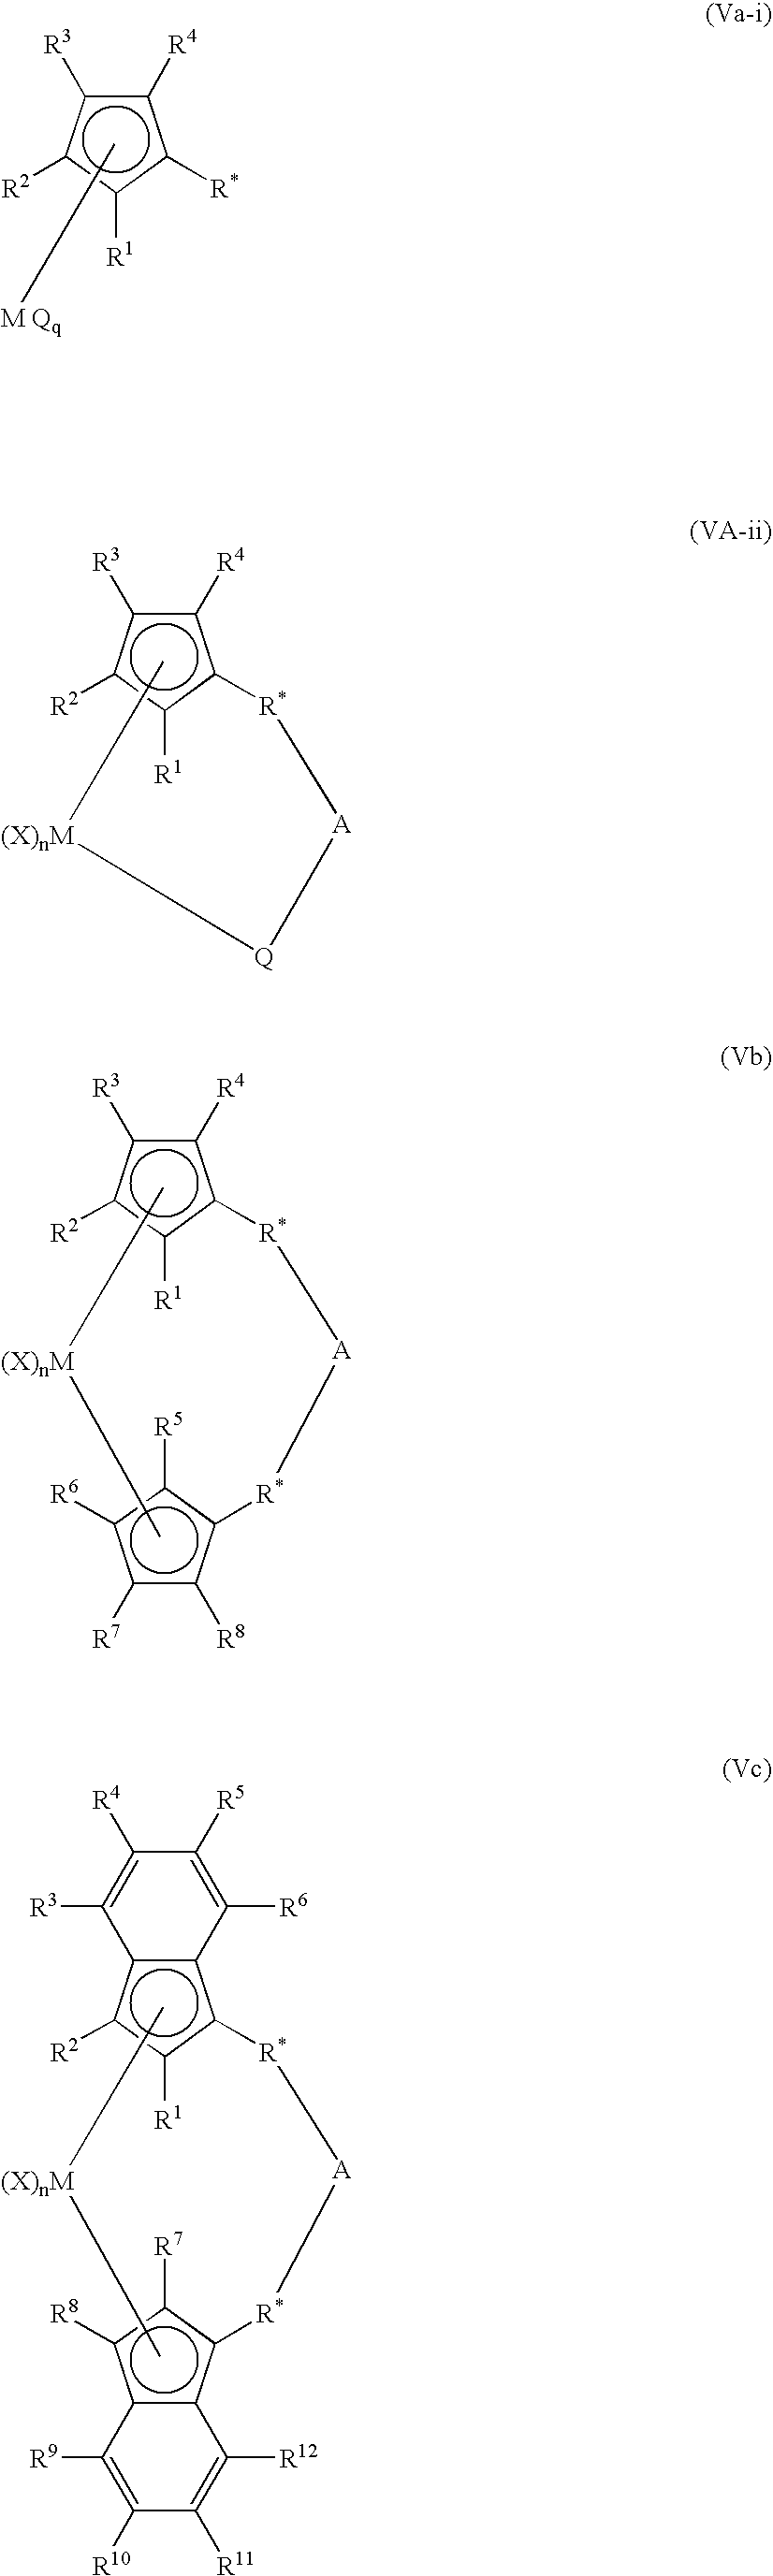 Polymerization process using metallocene catalyst systems